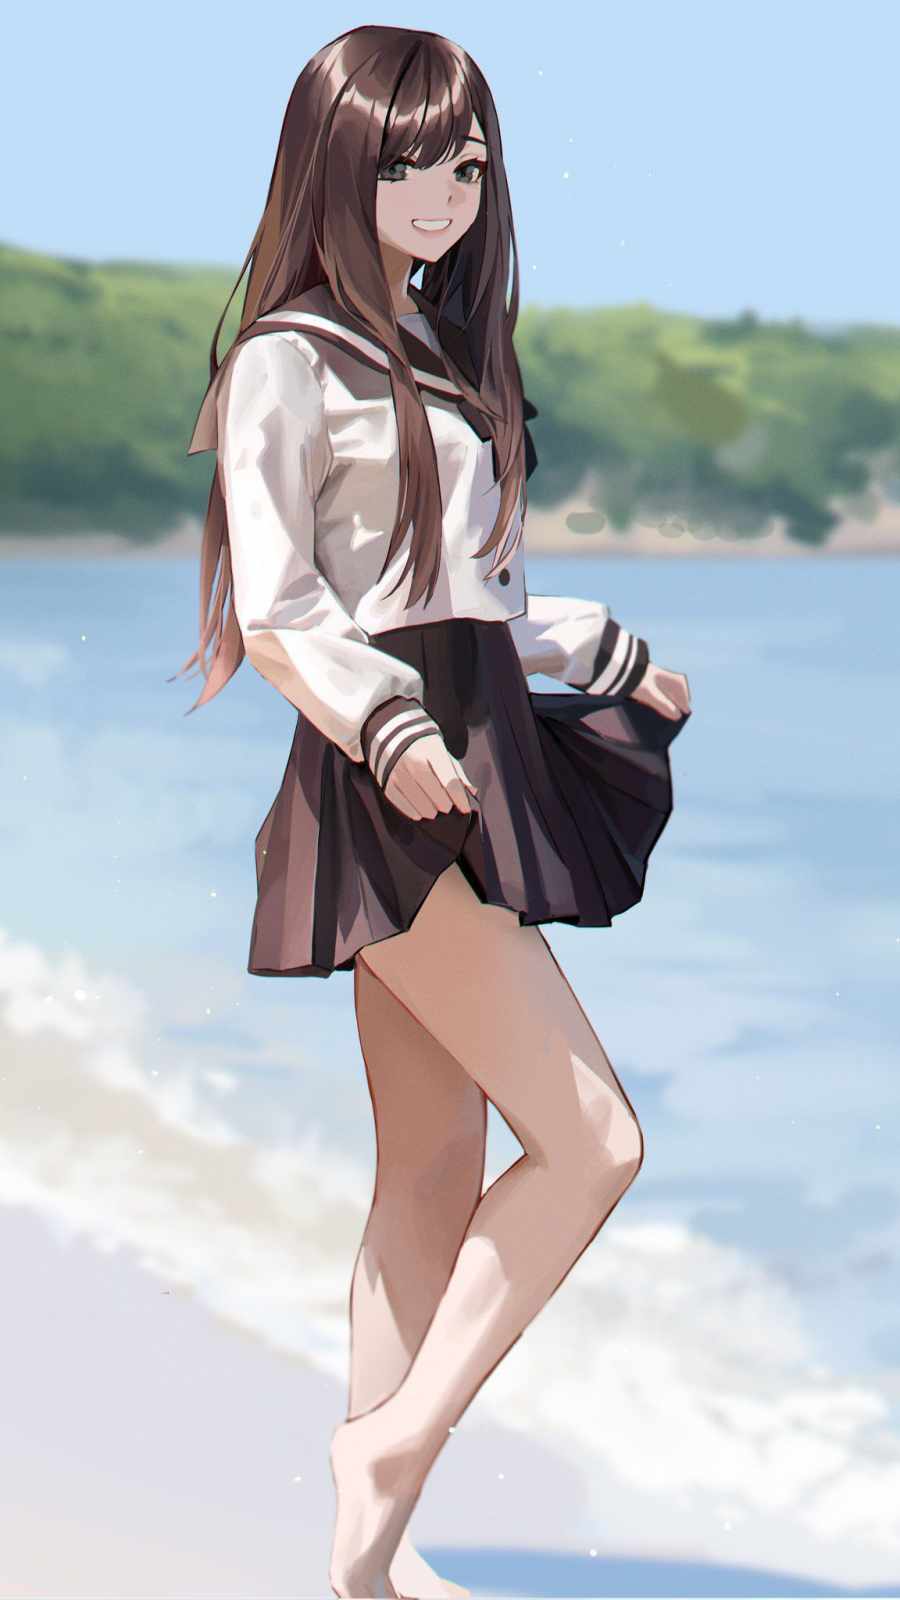 School Girl on Beach iPhone Wallpaper